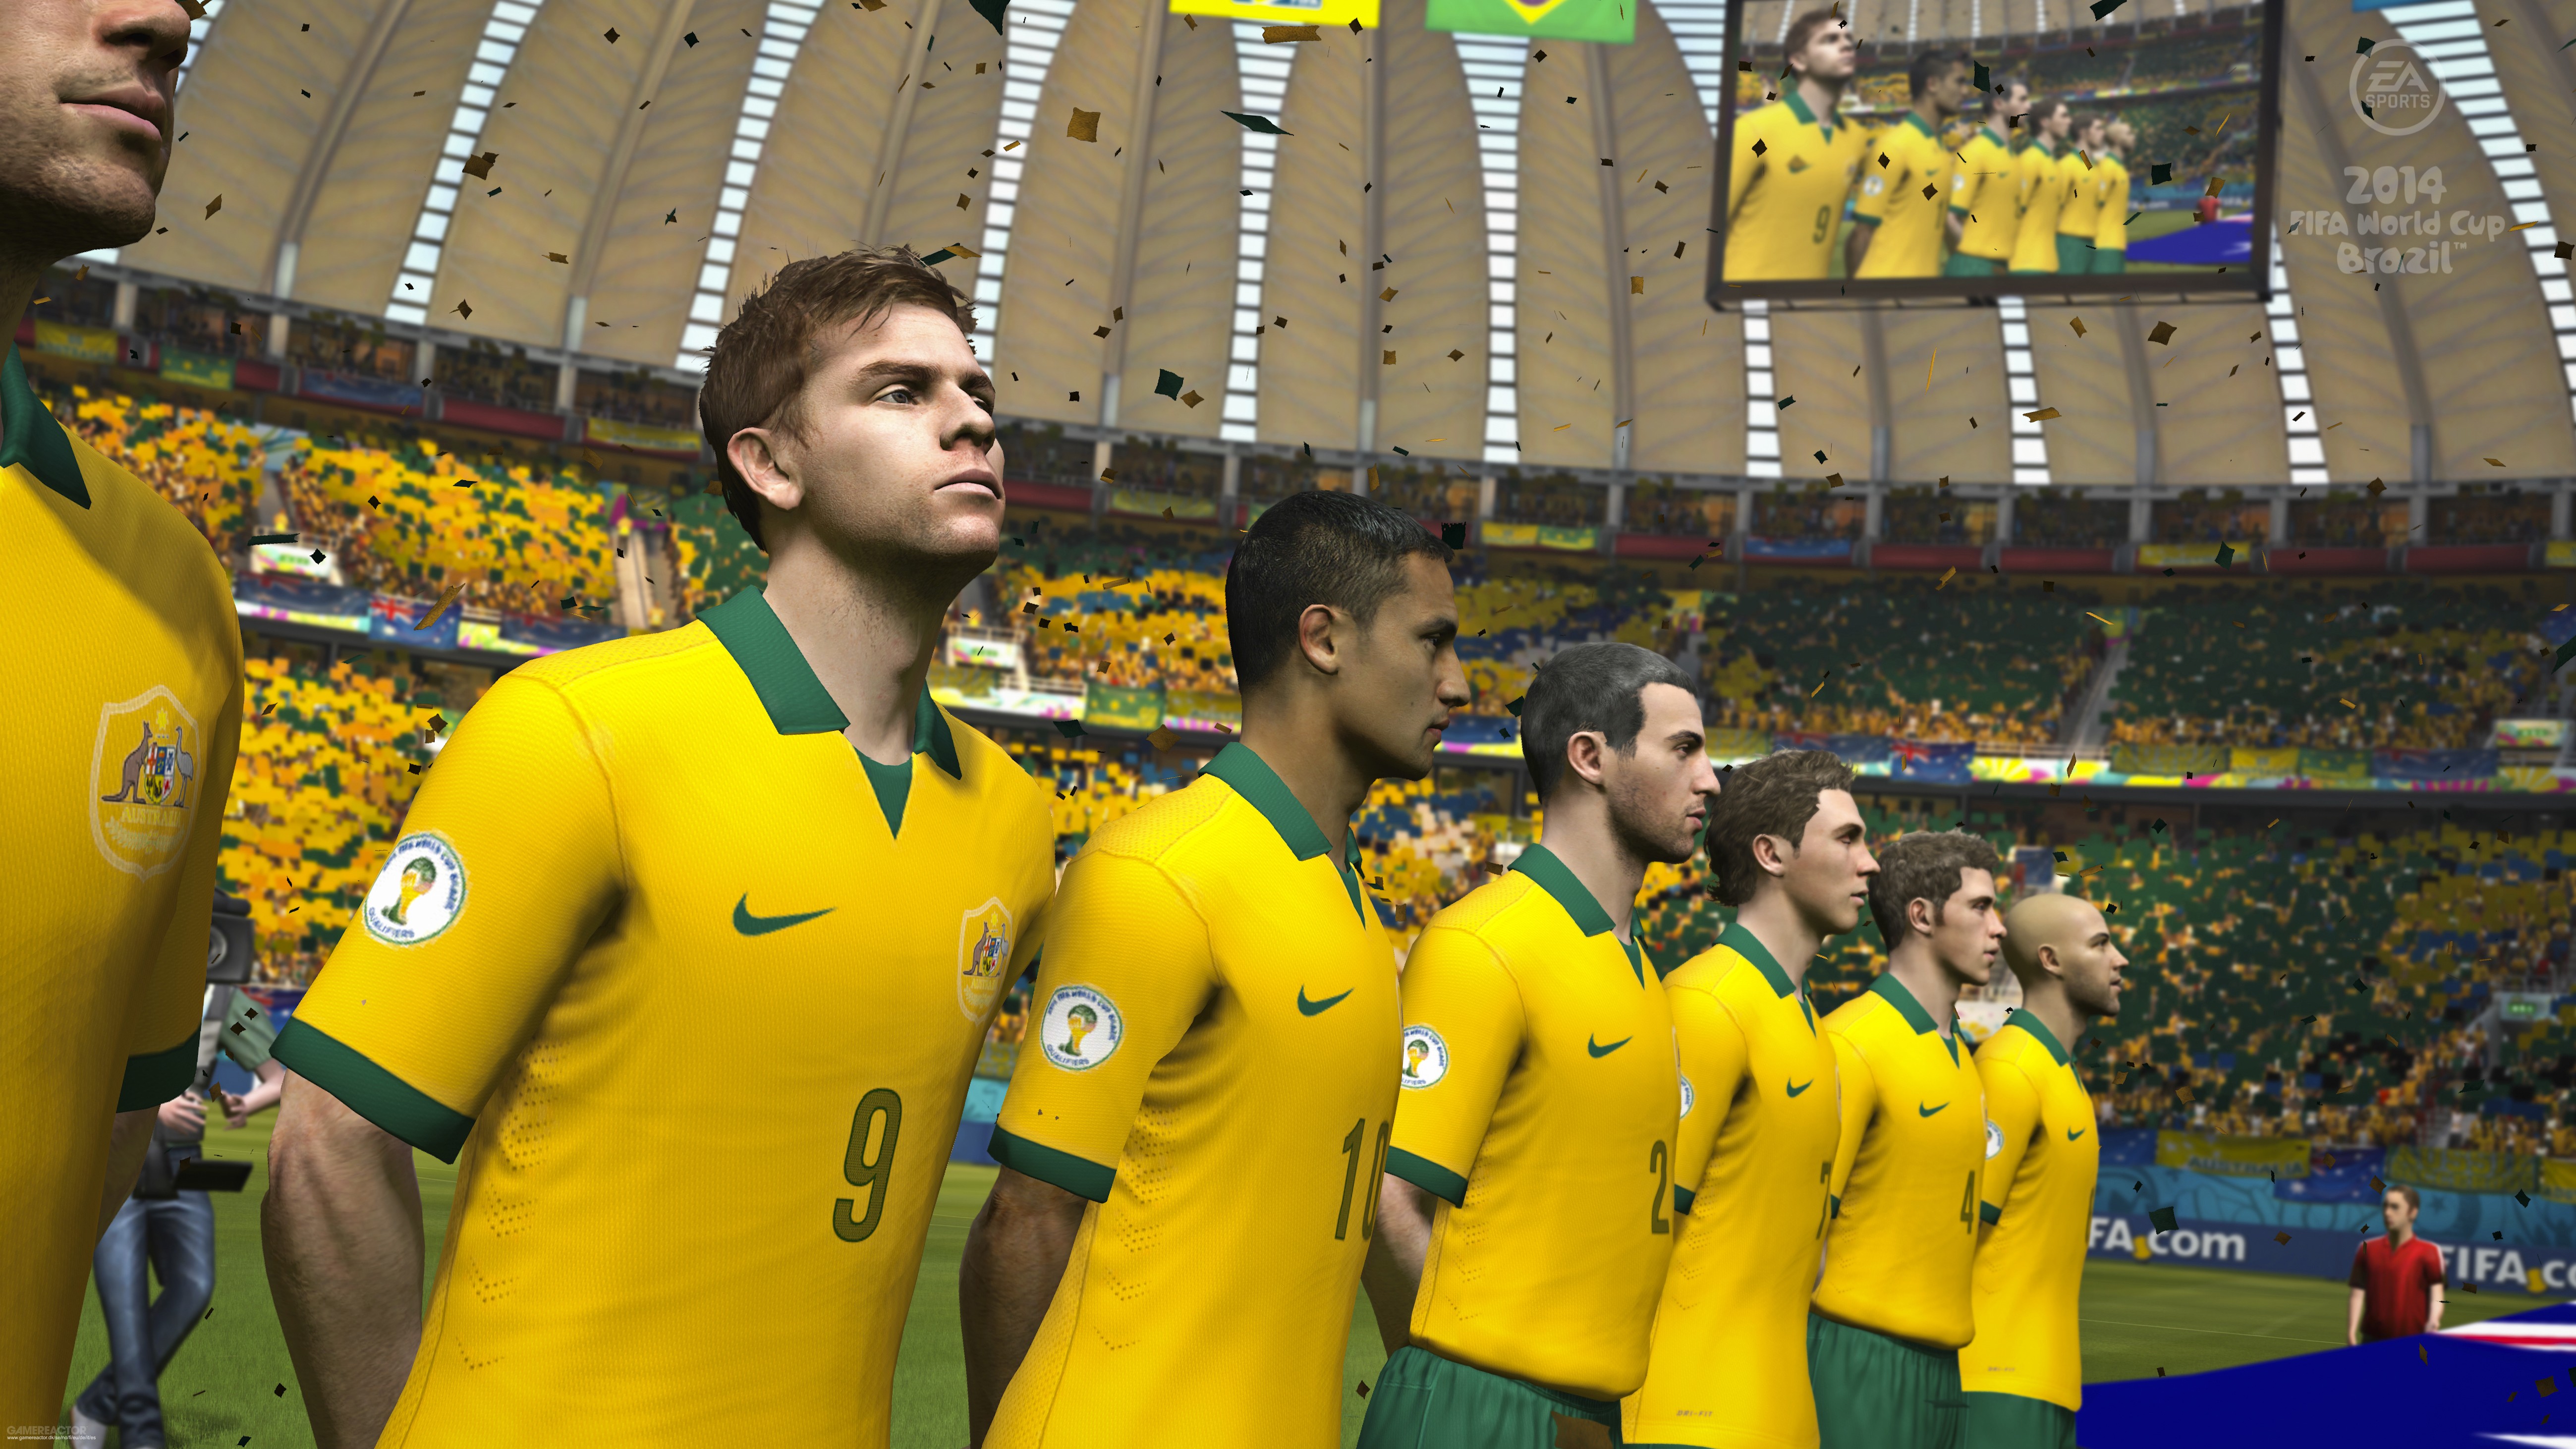 World cup 2014. ФИФА 14 ворлд кап Бразилия. FIFA 14 World Cup Brazil. ФИФА 14 ворлд кап 2014 Бразилия. 2014 FIFA World Cup Brazil для Xbox 360.